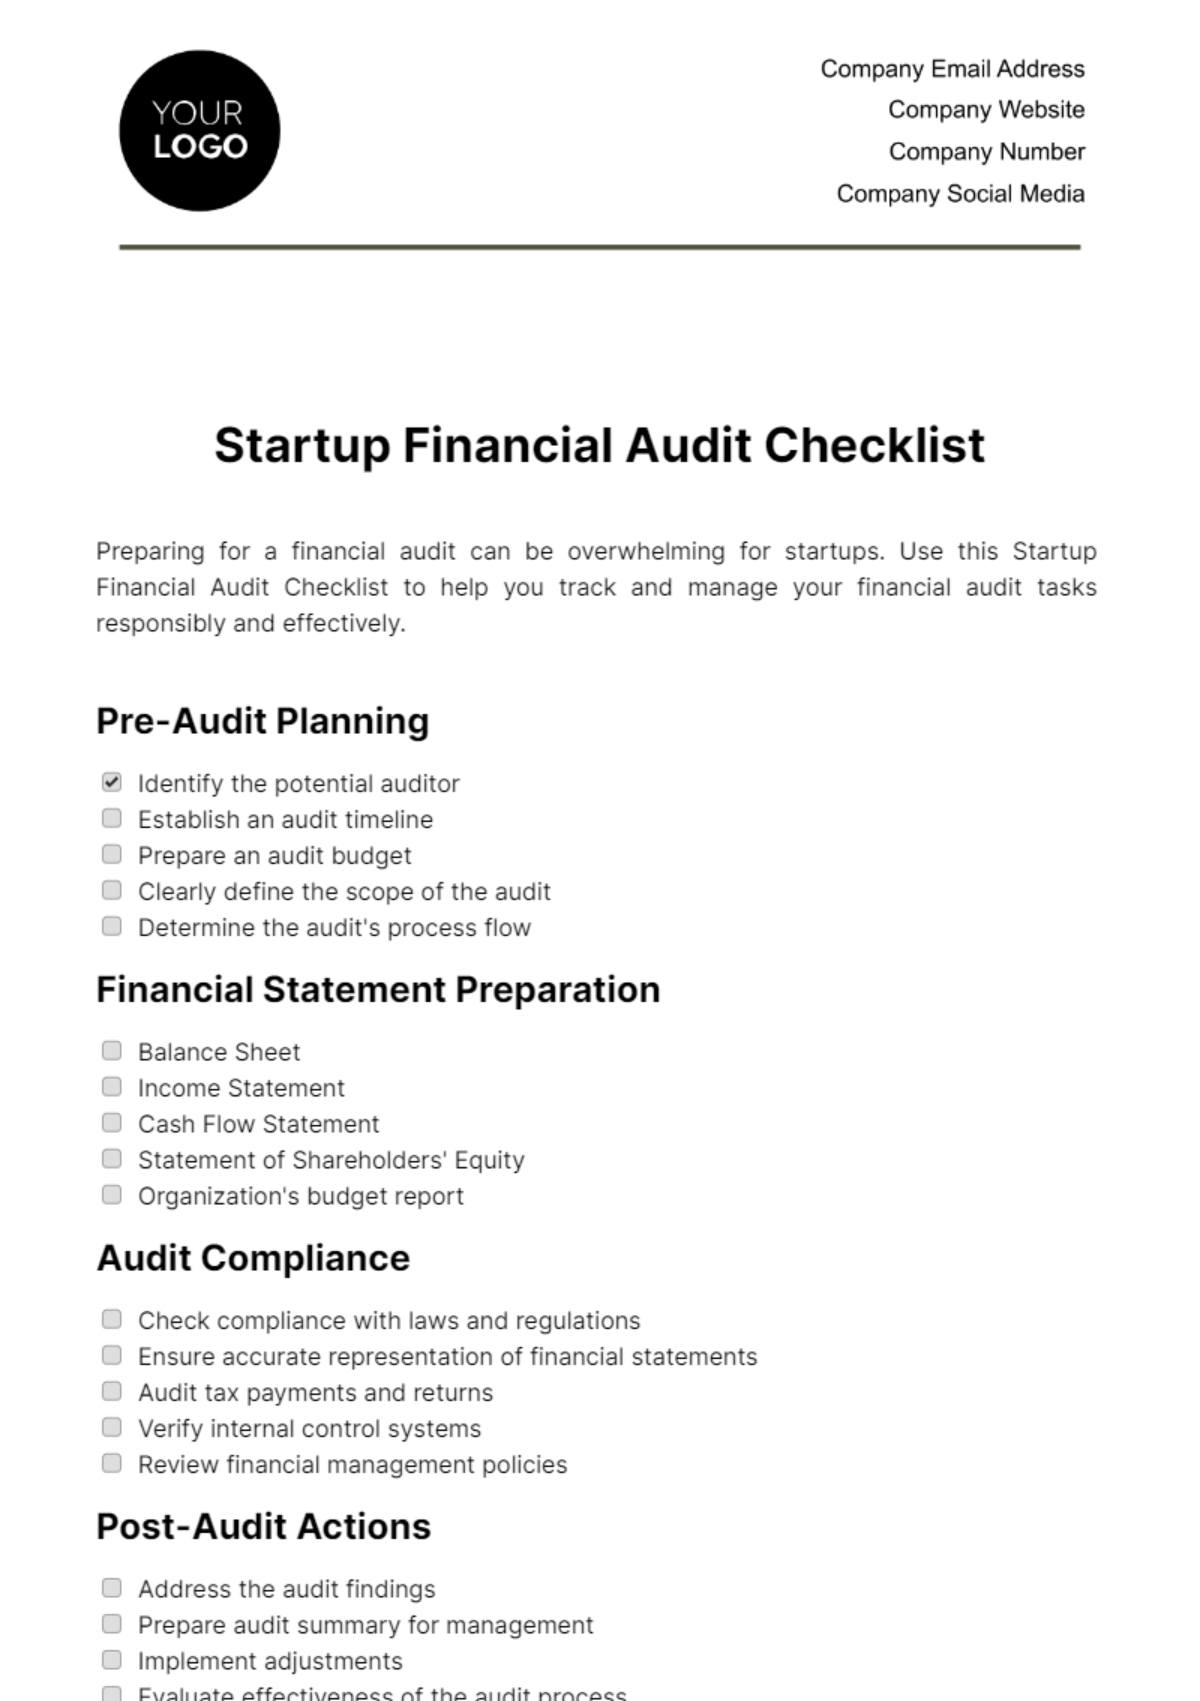 Free Startup Financial Audit Checklist Template